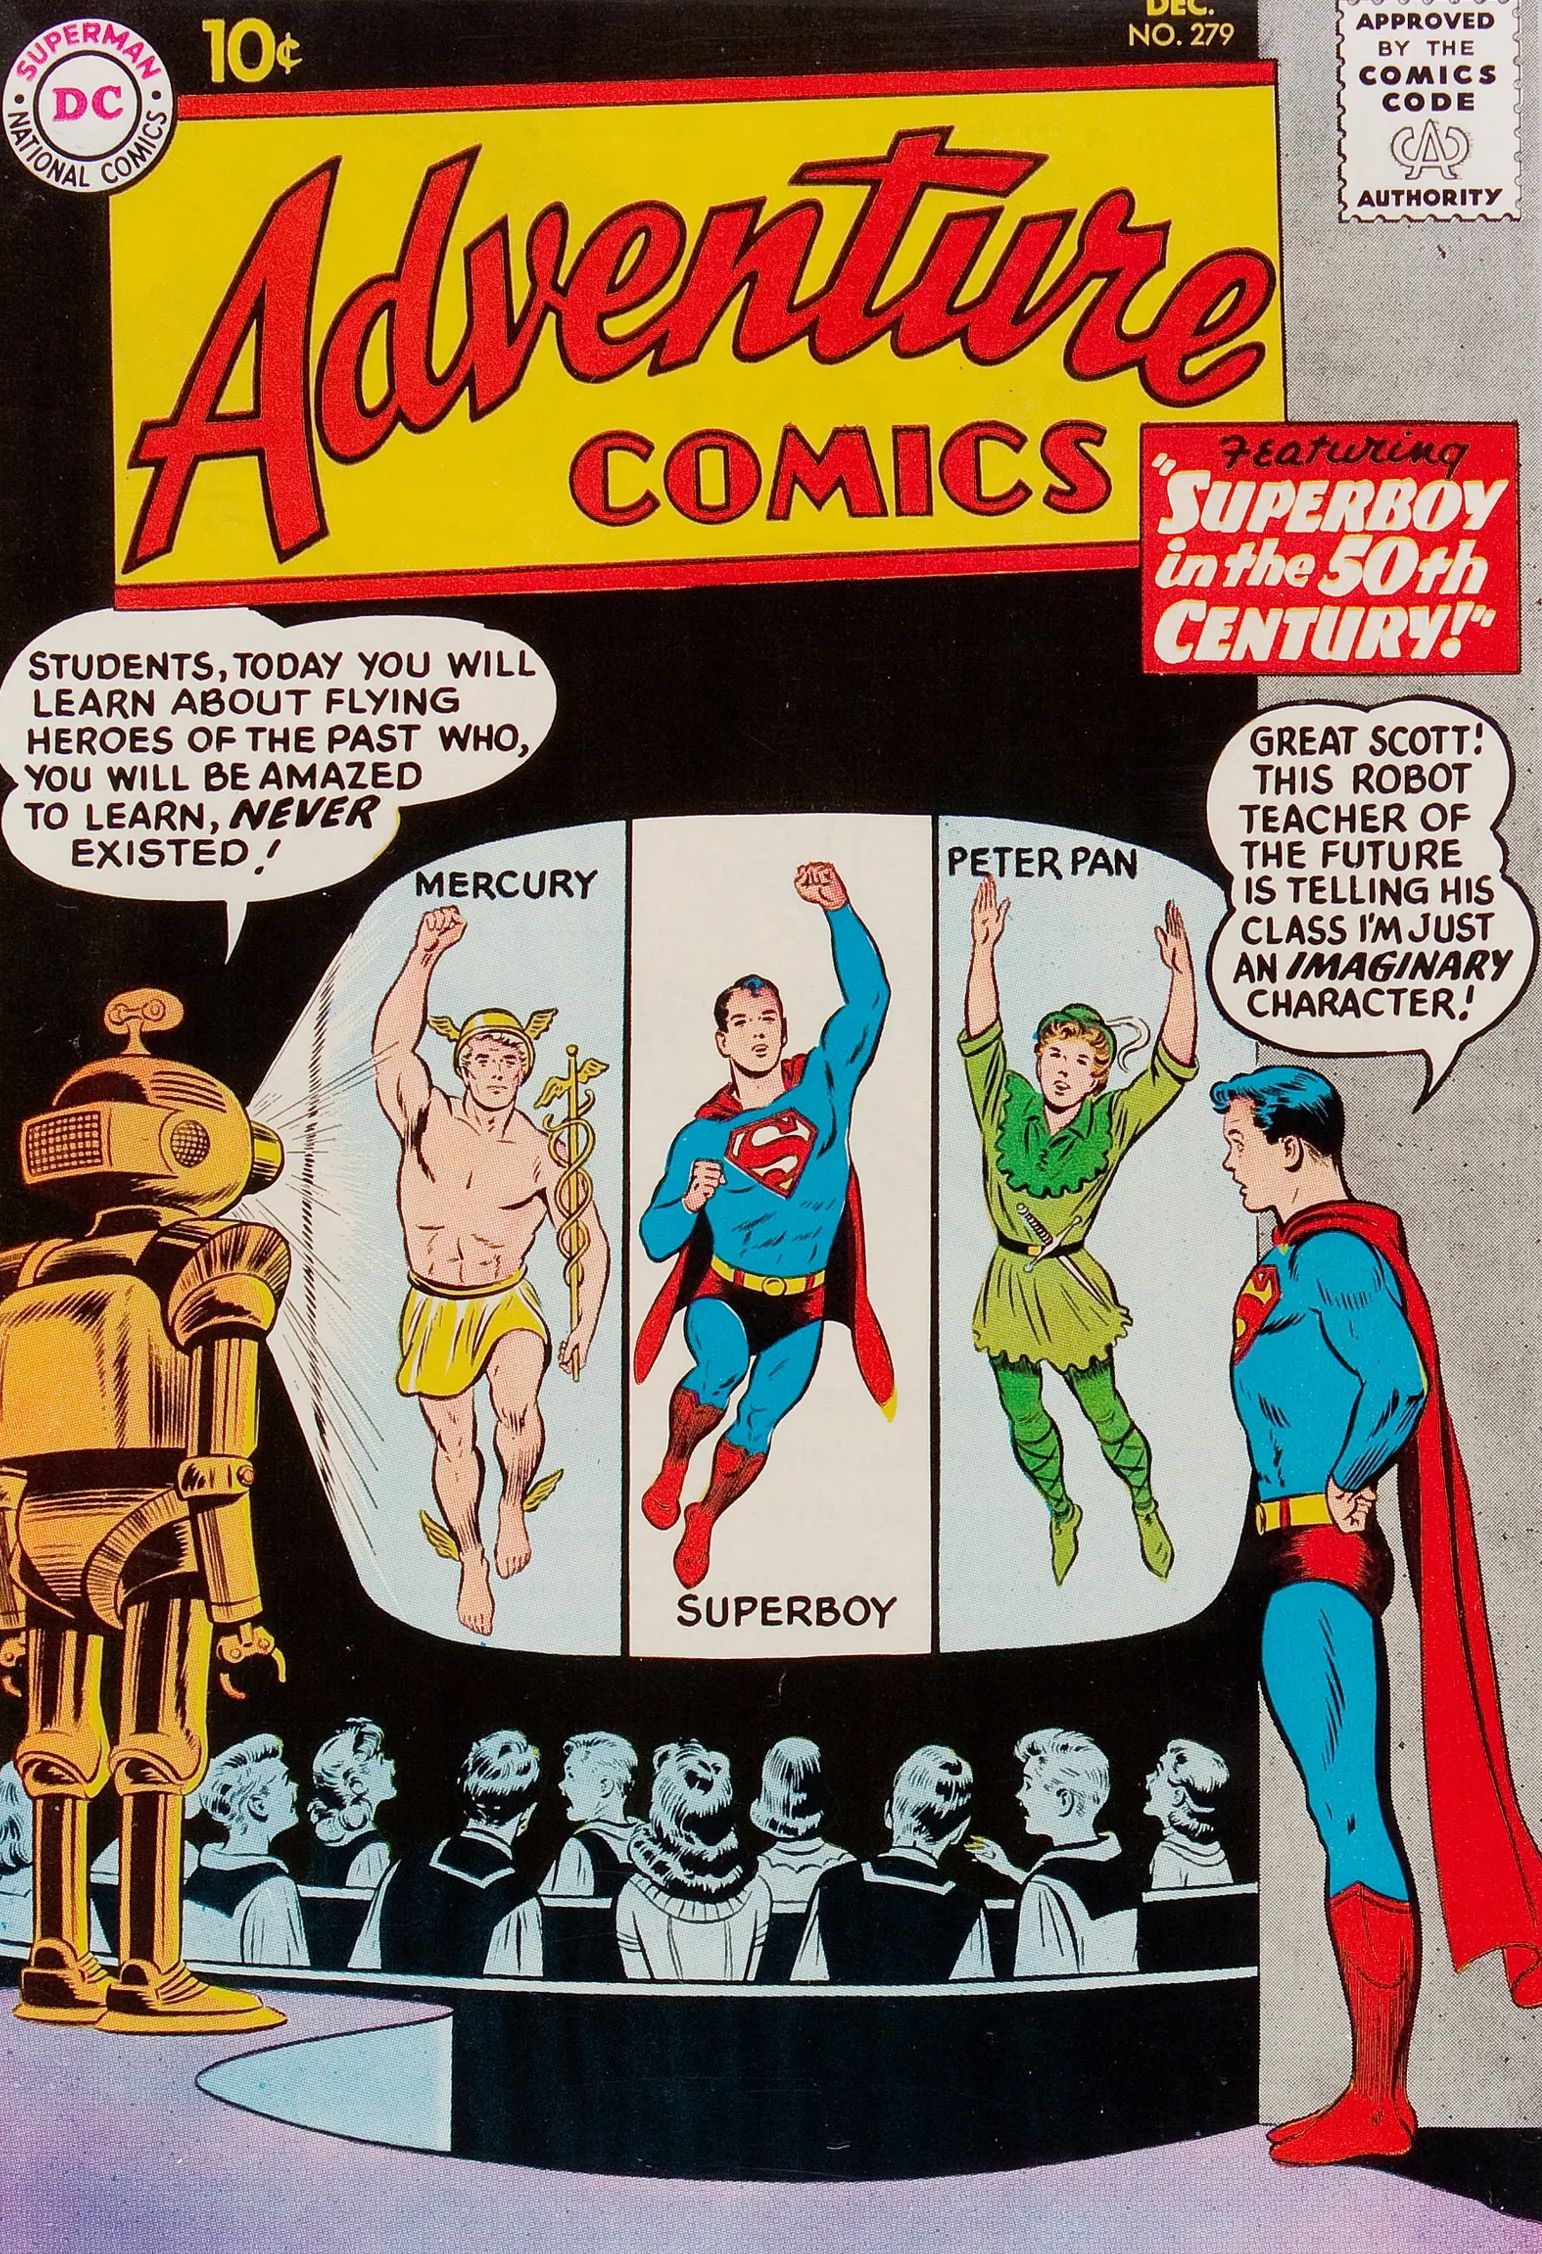 Adventure Comics #279 Comic